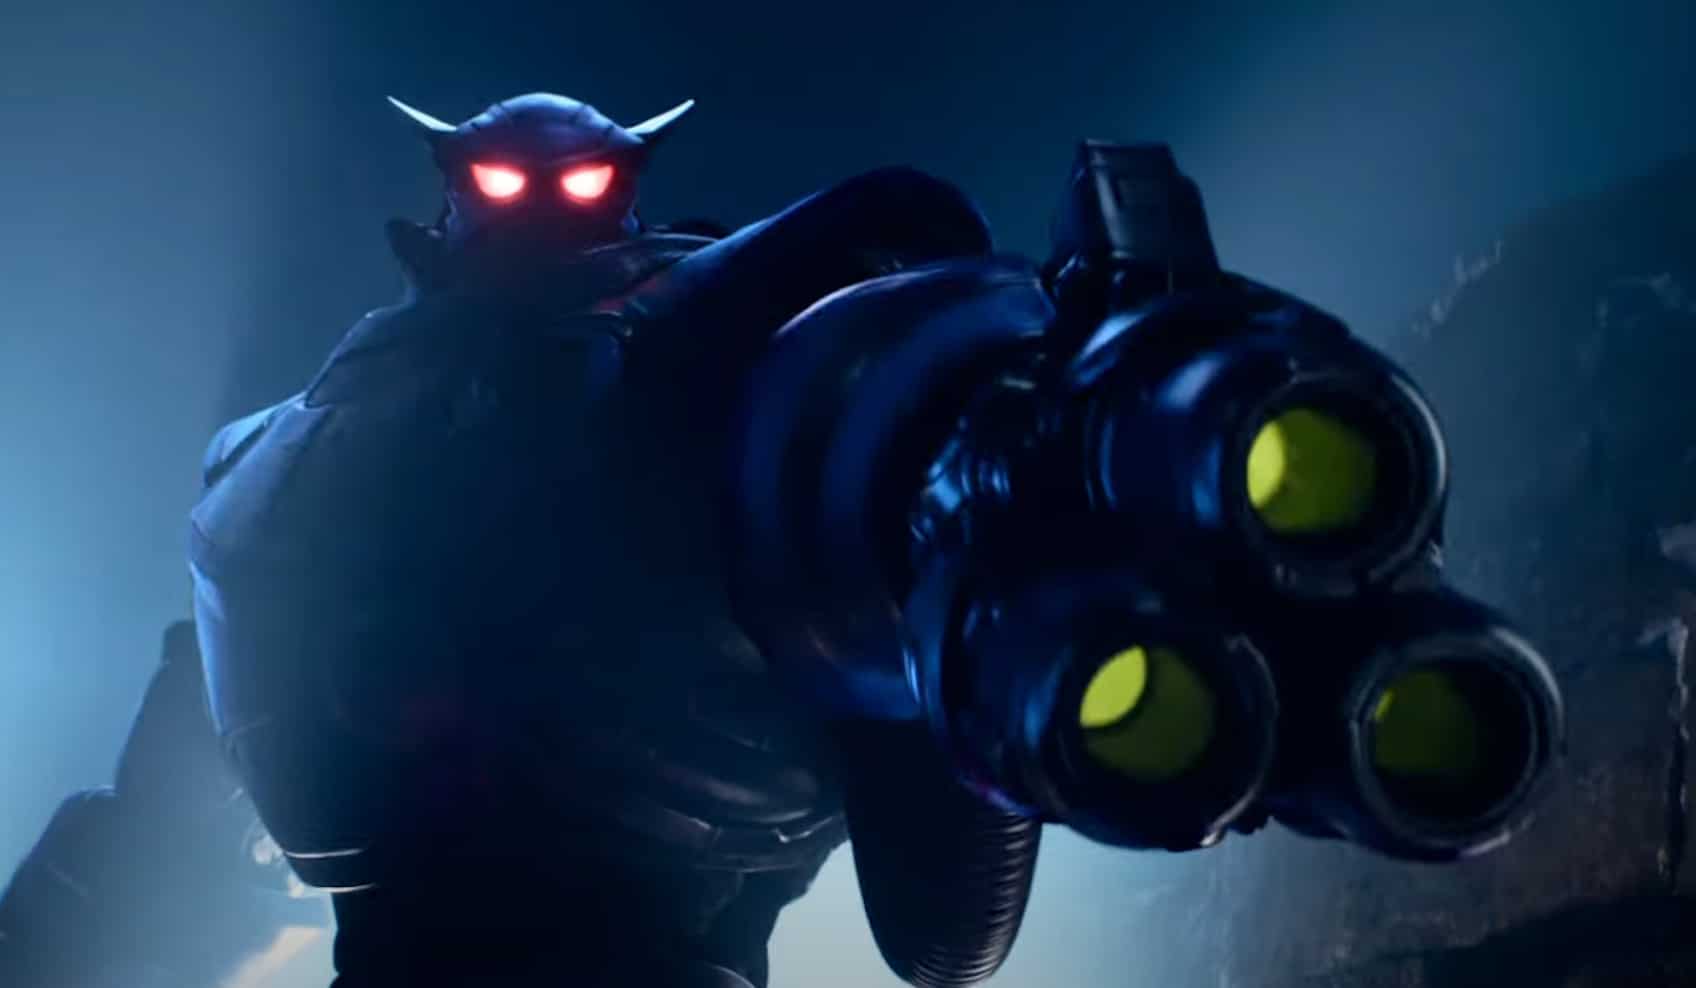 Lightyear Trailer has Wrist Lasers & a Killer Emperor Zurg